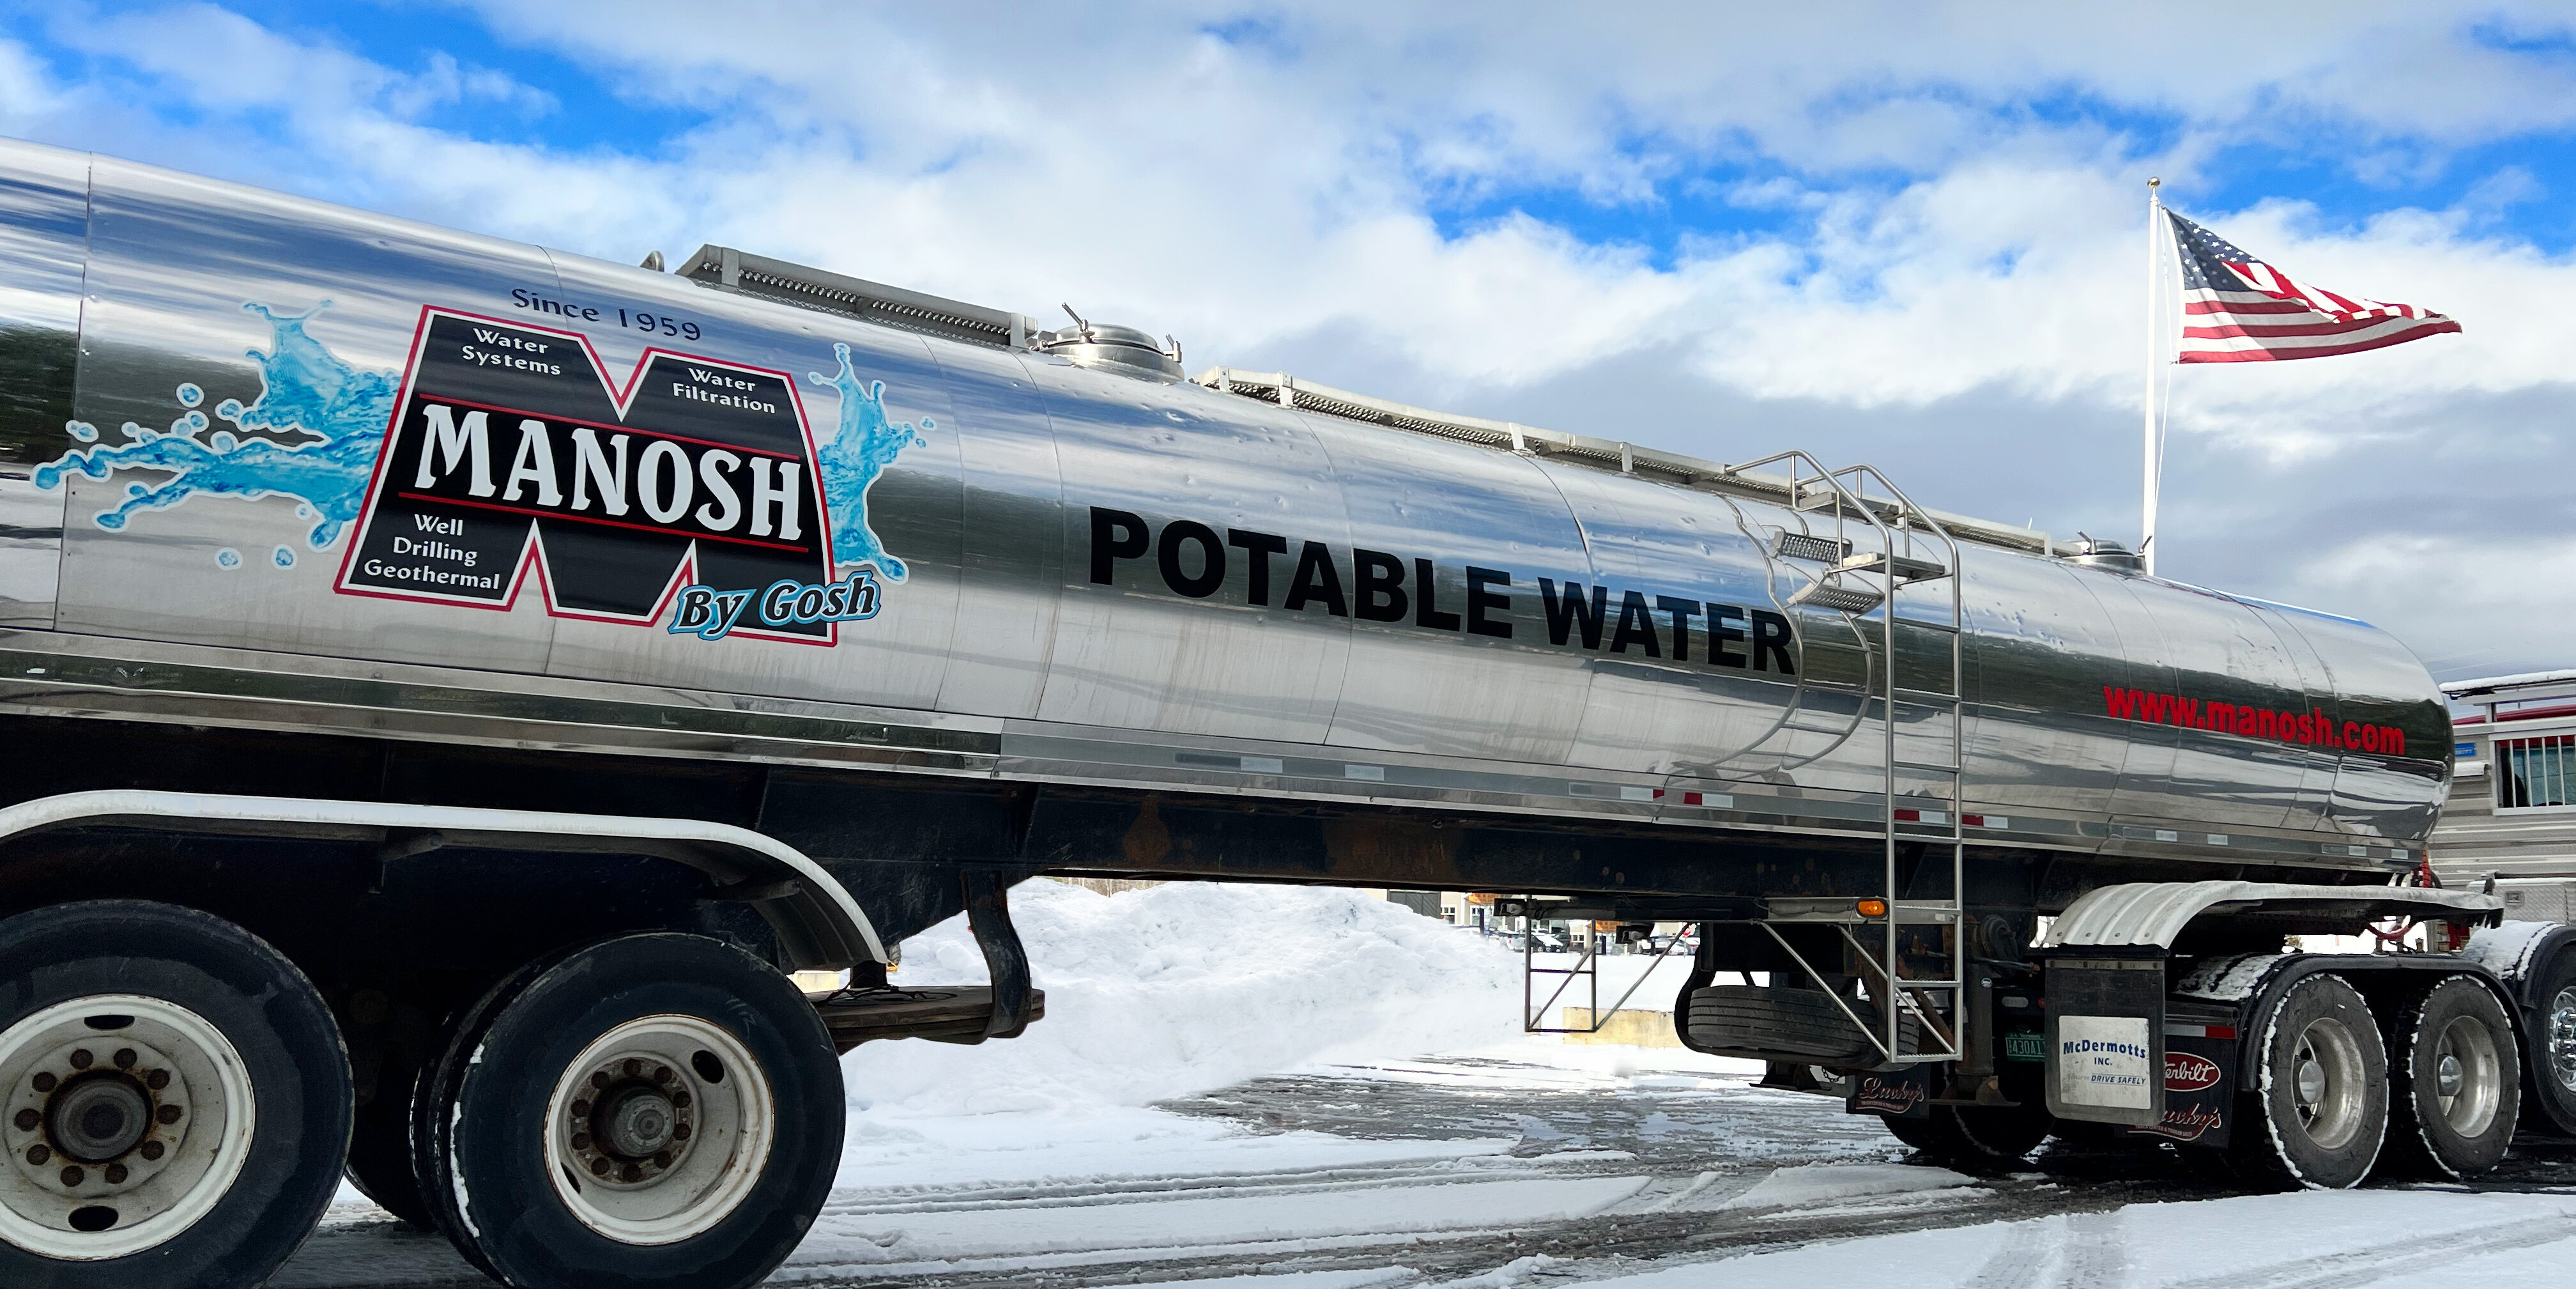 Manosh potable water